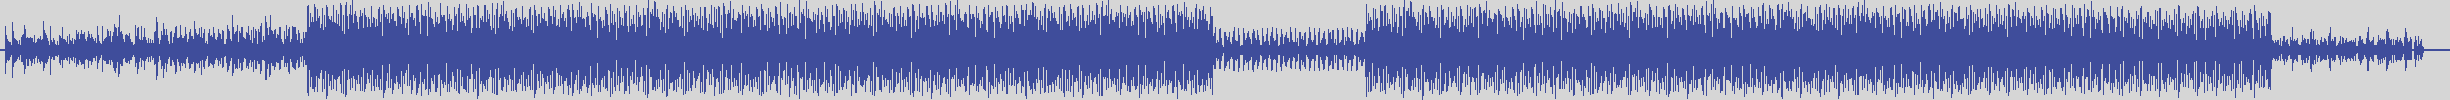 nf_boyz_records [NFY040] Jet Set - Bossacabana [Original Mix] audio wave form